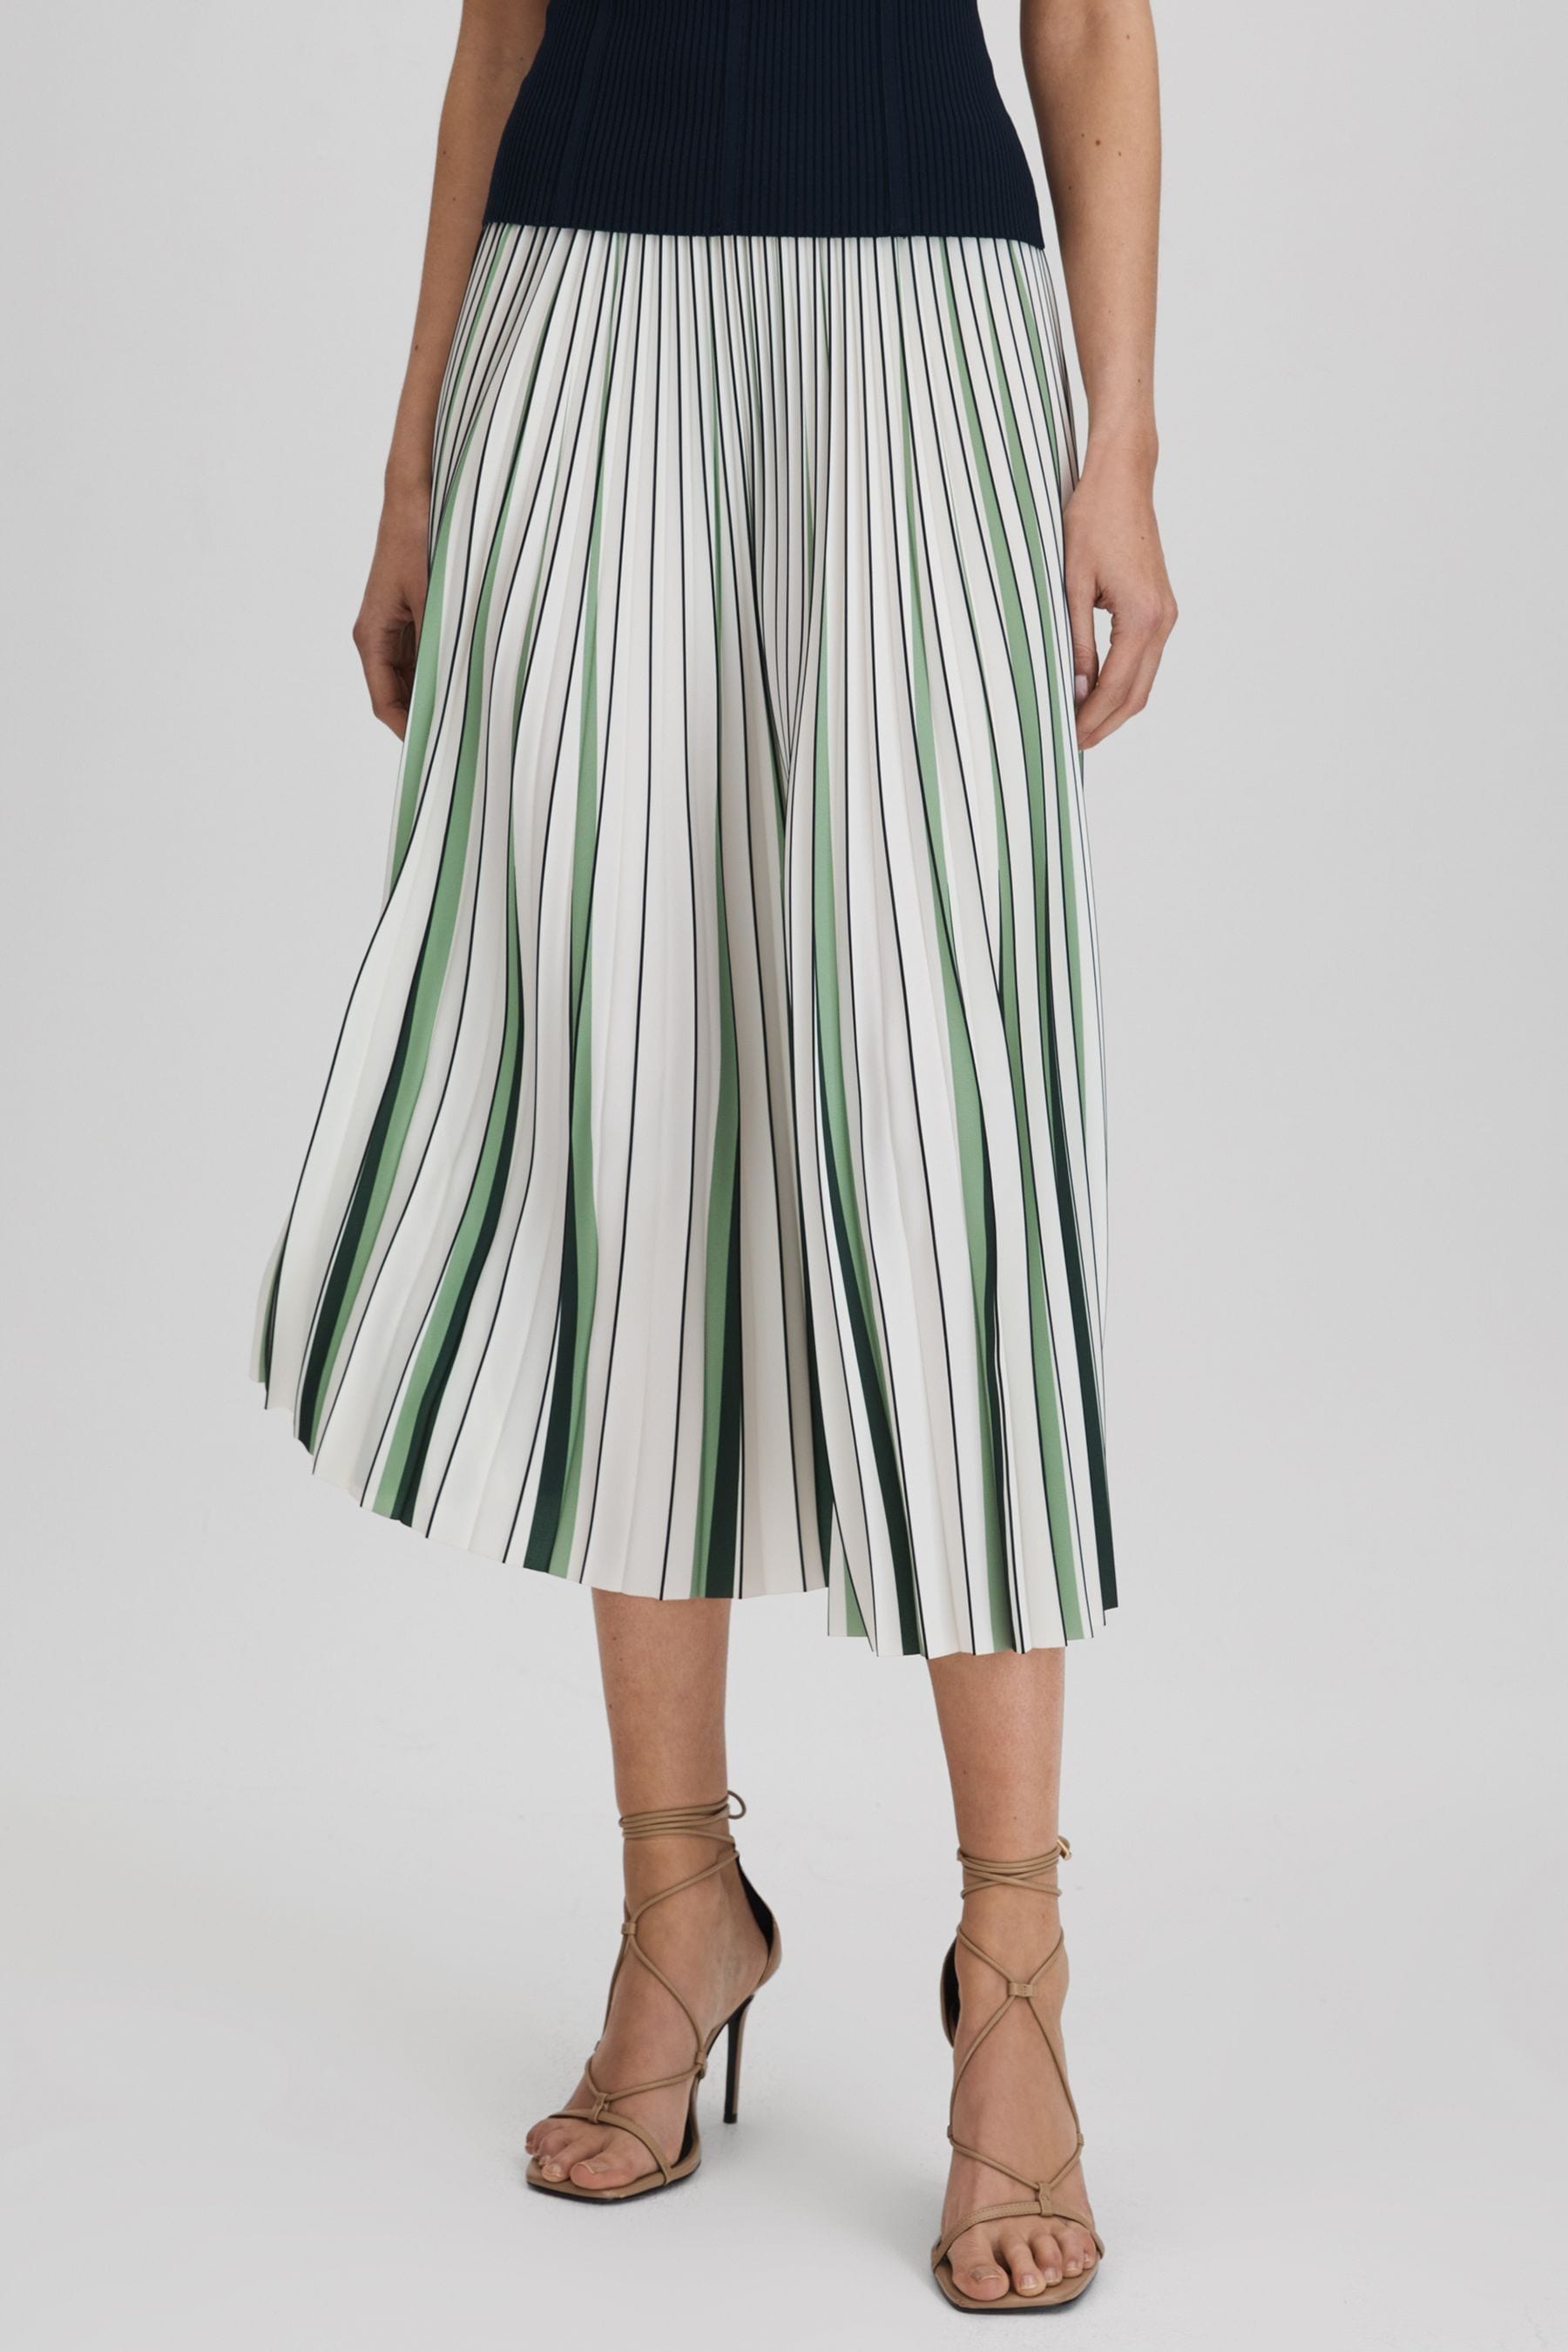 Reiss Saige - Green/cream Pleated Striped Midi Skirt, Us 8